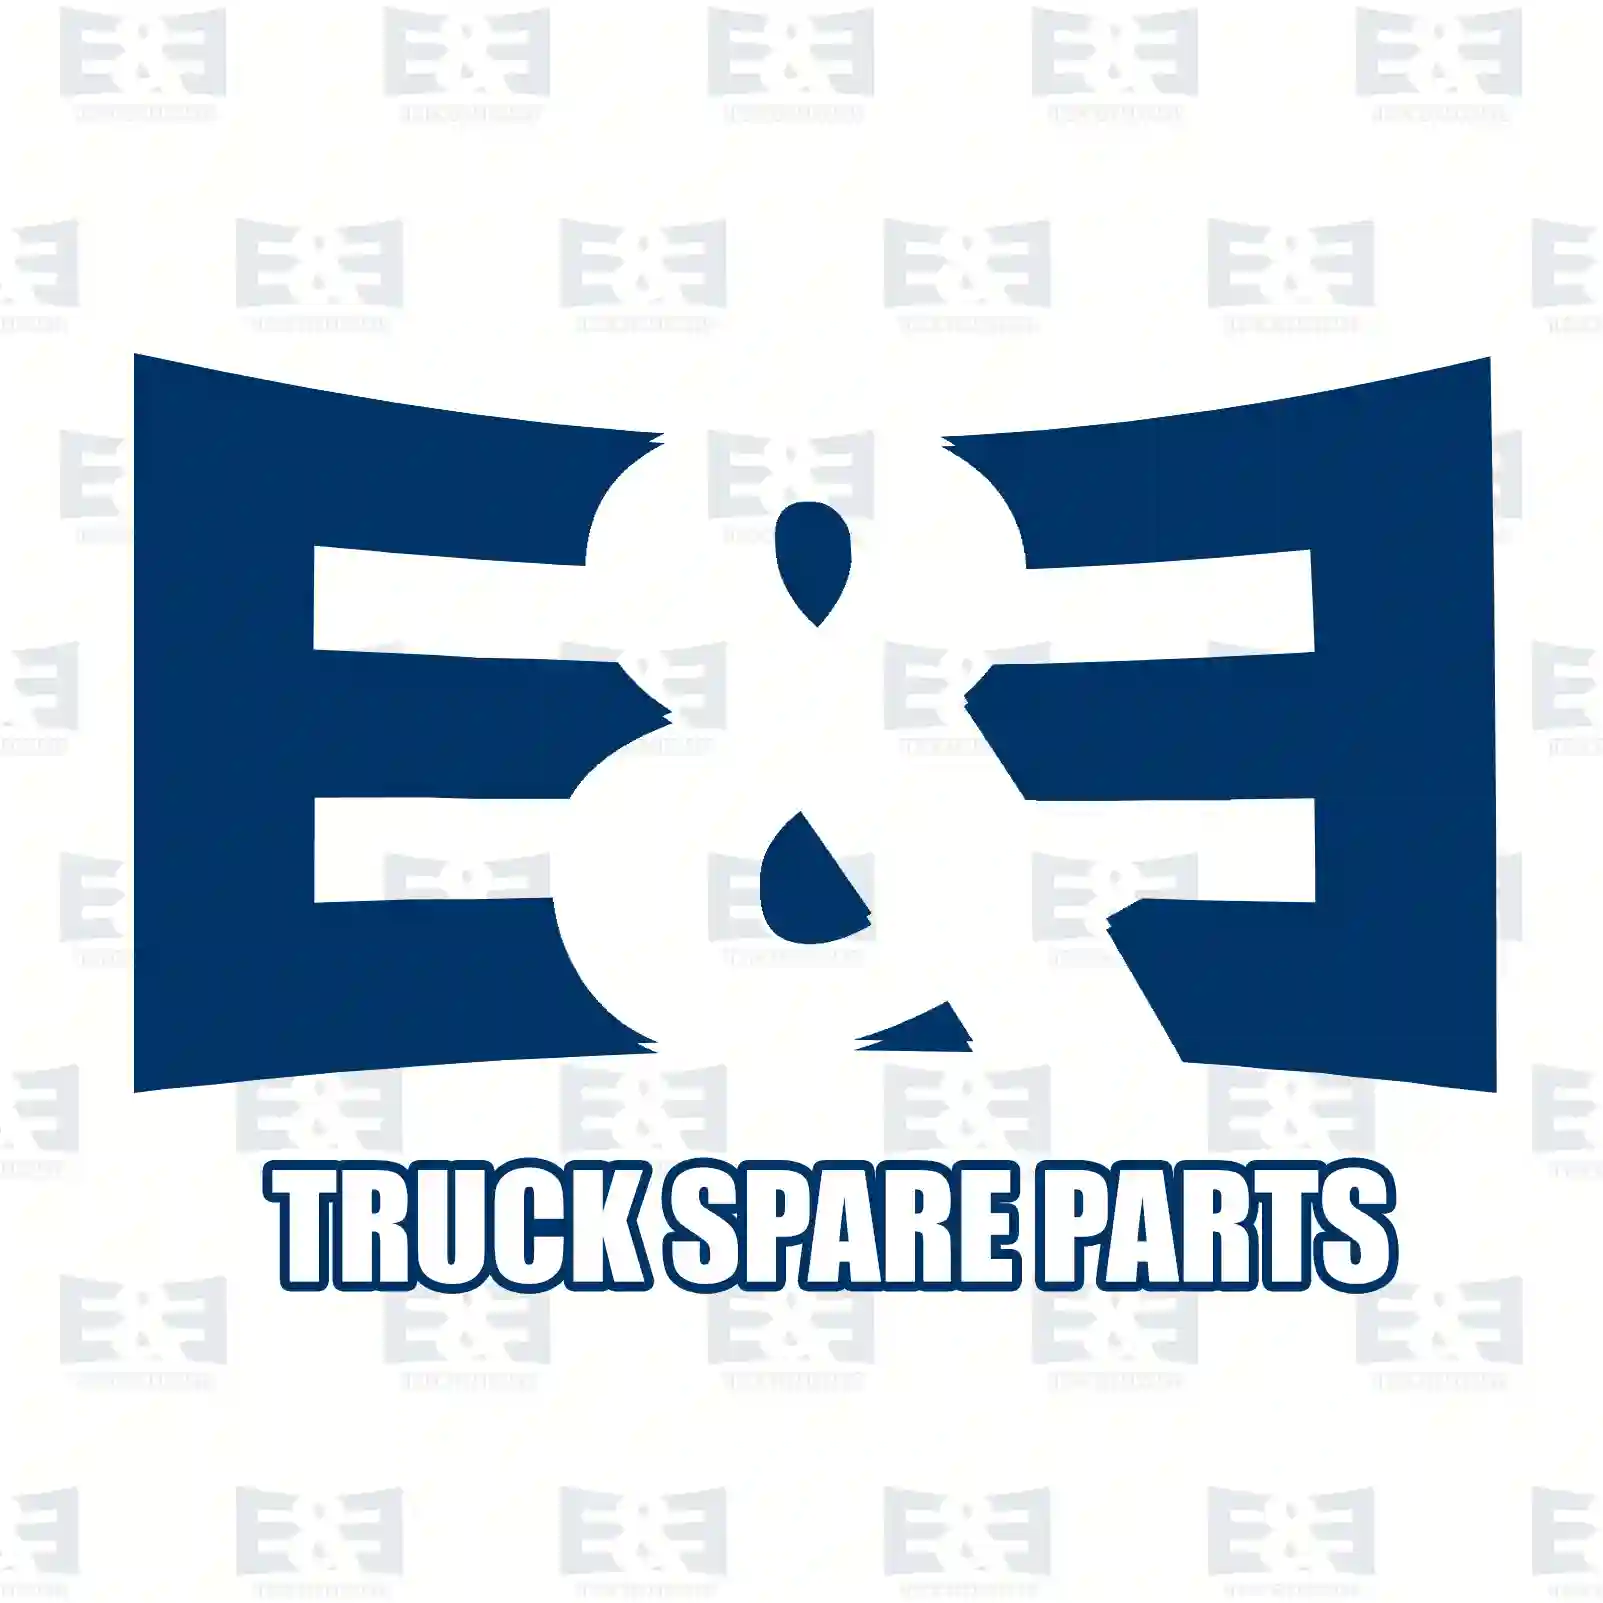 Input shaft, 2E2279454, 7422352397, 22168430, 22352397 ||  2E2279454 E&E Truck Spare Parts | Truck Spare Parts, Auotomotive Spare Parts Input shaft, 2E2279454, 7422352397, 22168430, 22352397 ||  2E2279454 E&E Truck Spare Parts | Truck Spare Parts, Auotomotive Spare Parts